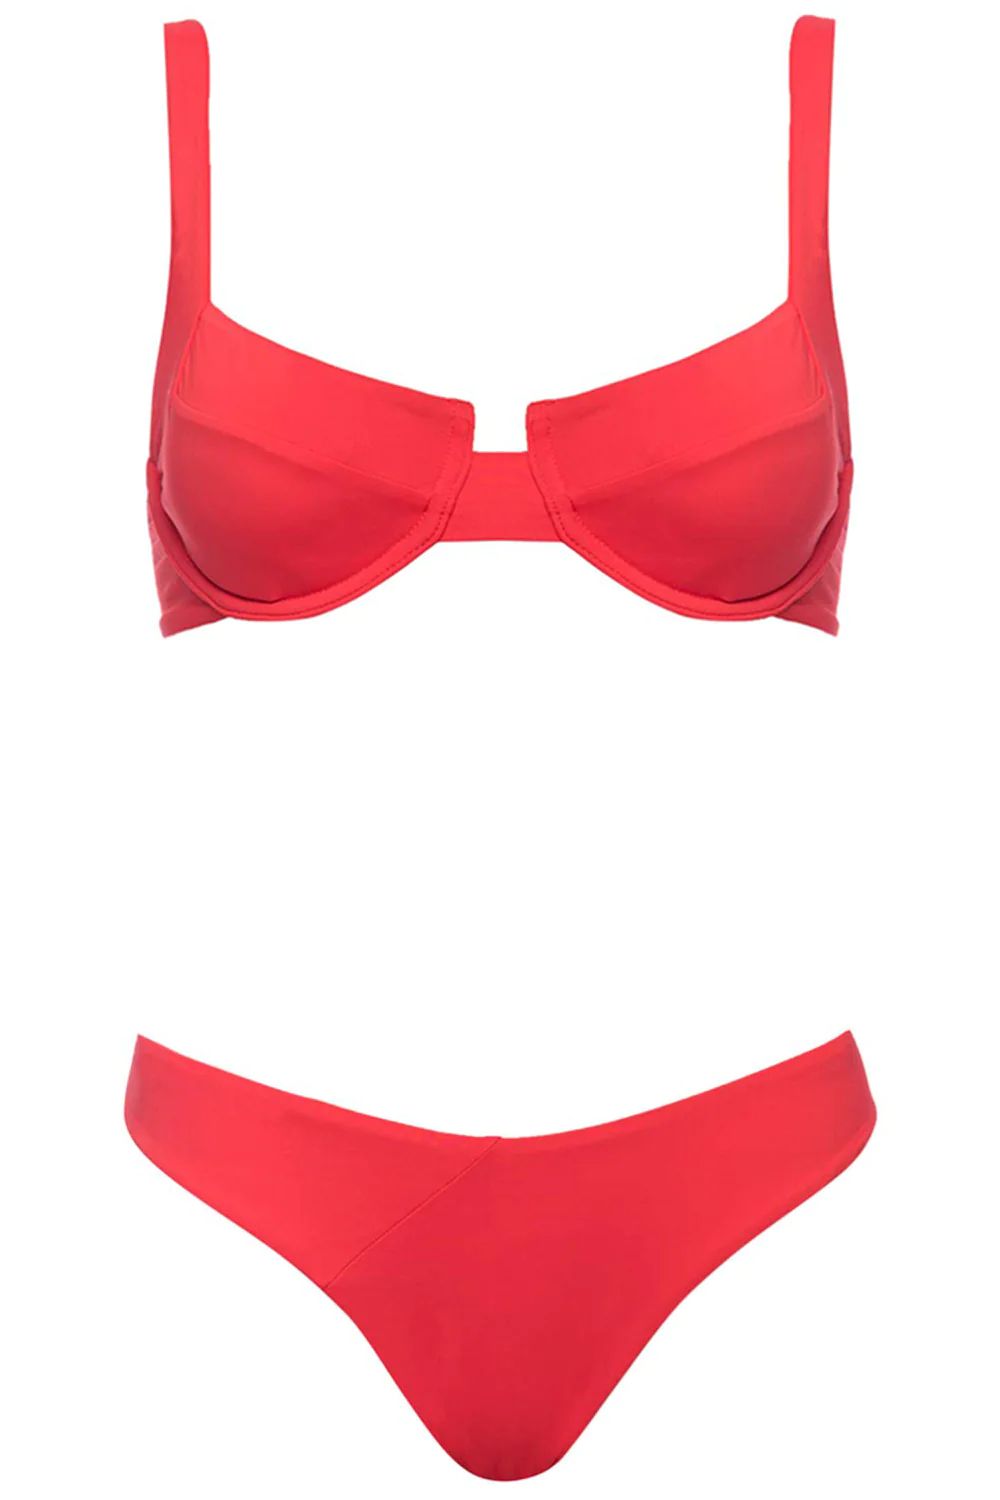 Laguna Bikini Red Set | VETCHY